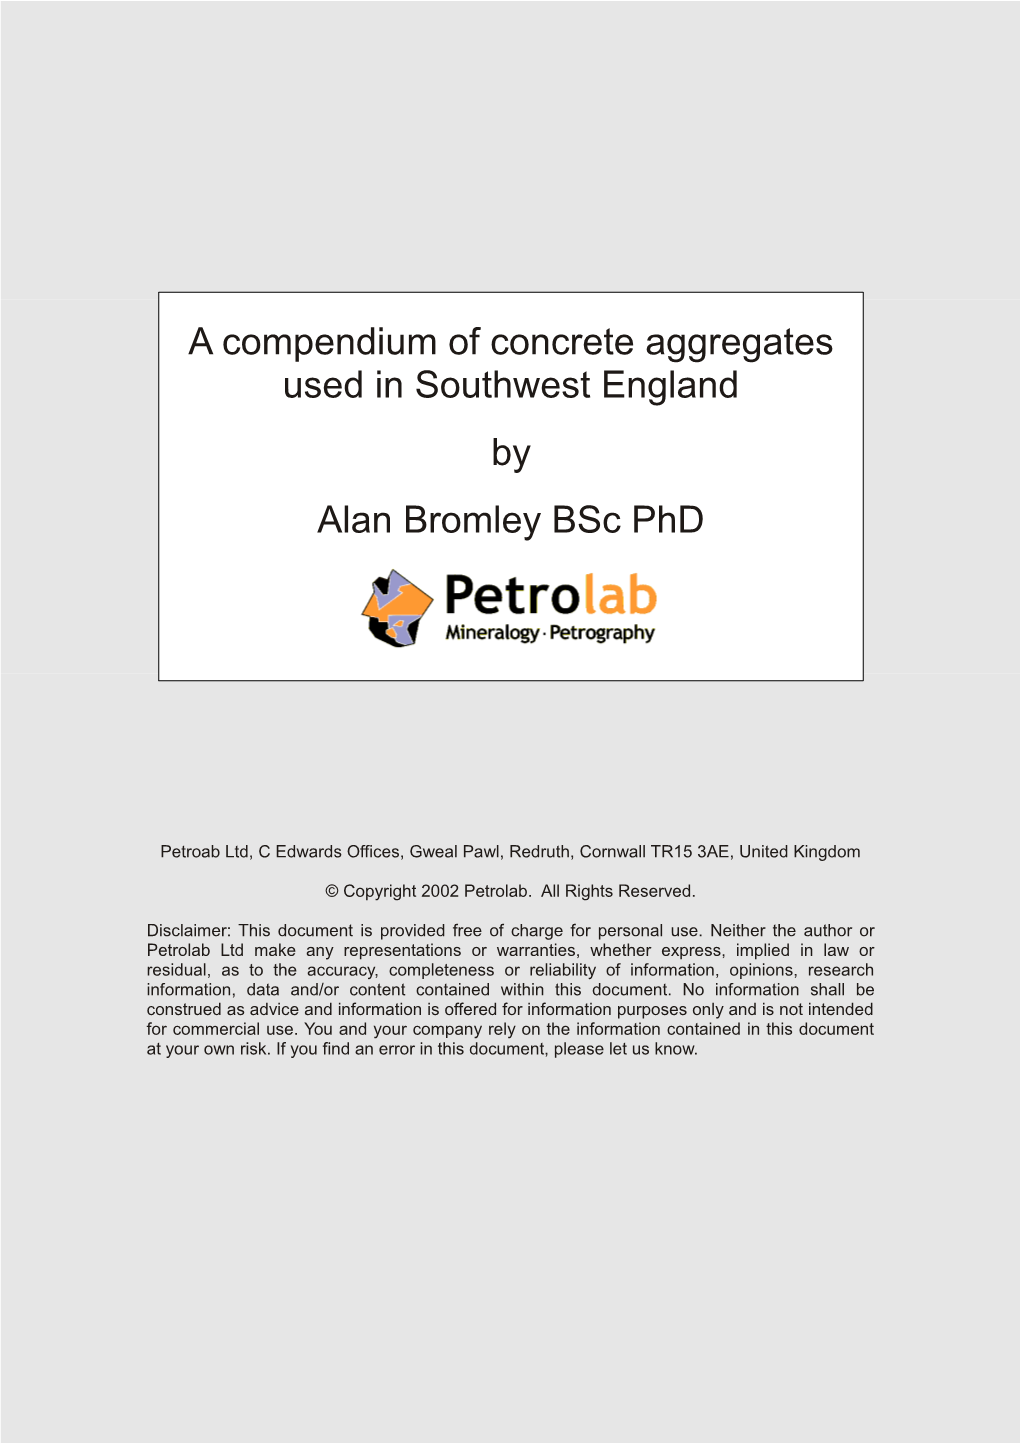 A Compendium of Concrete Aggregates Used in SW England